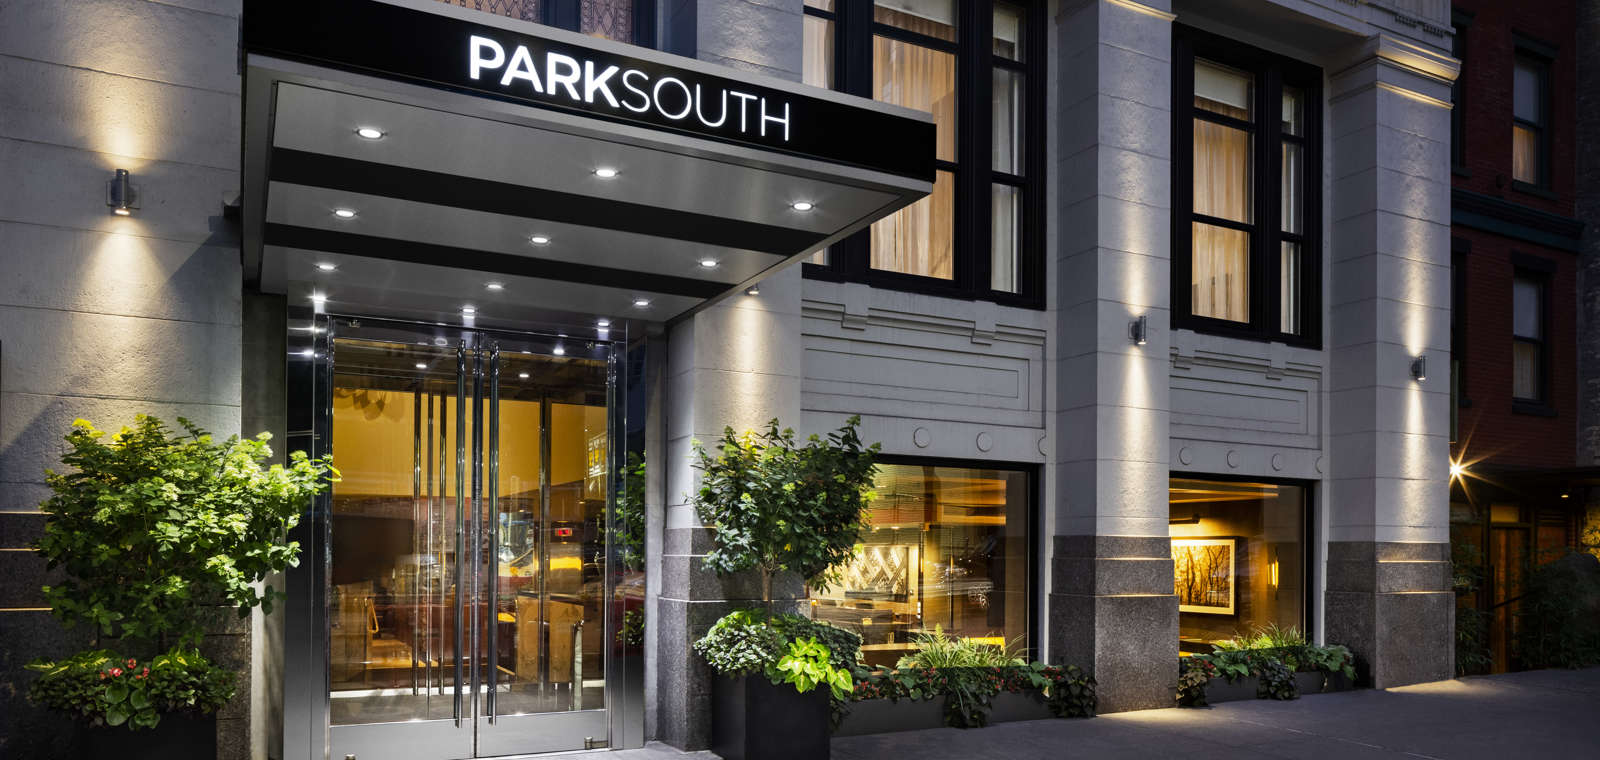 Park South Hotel Front Entrance